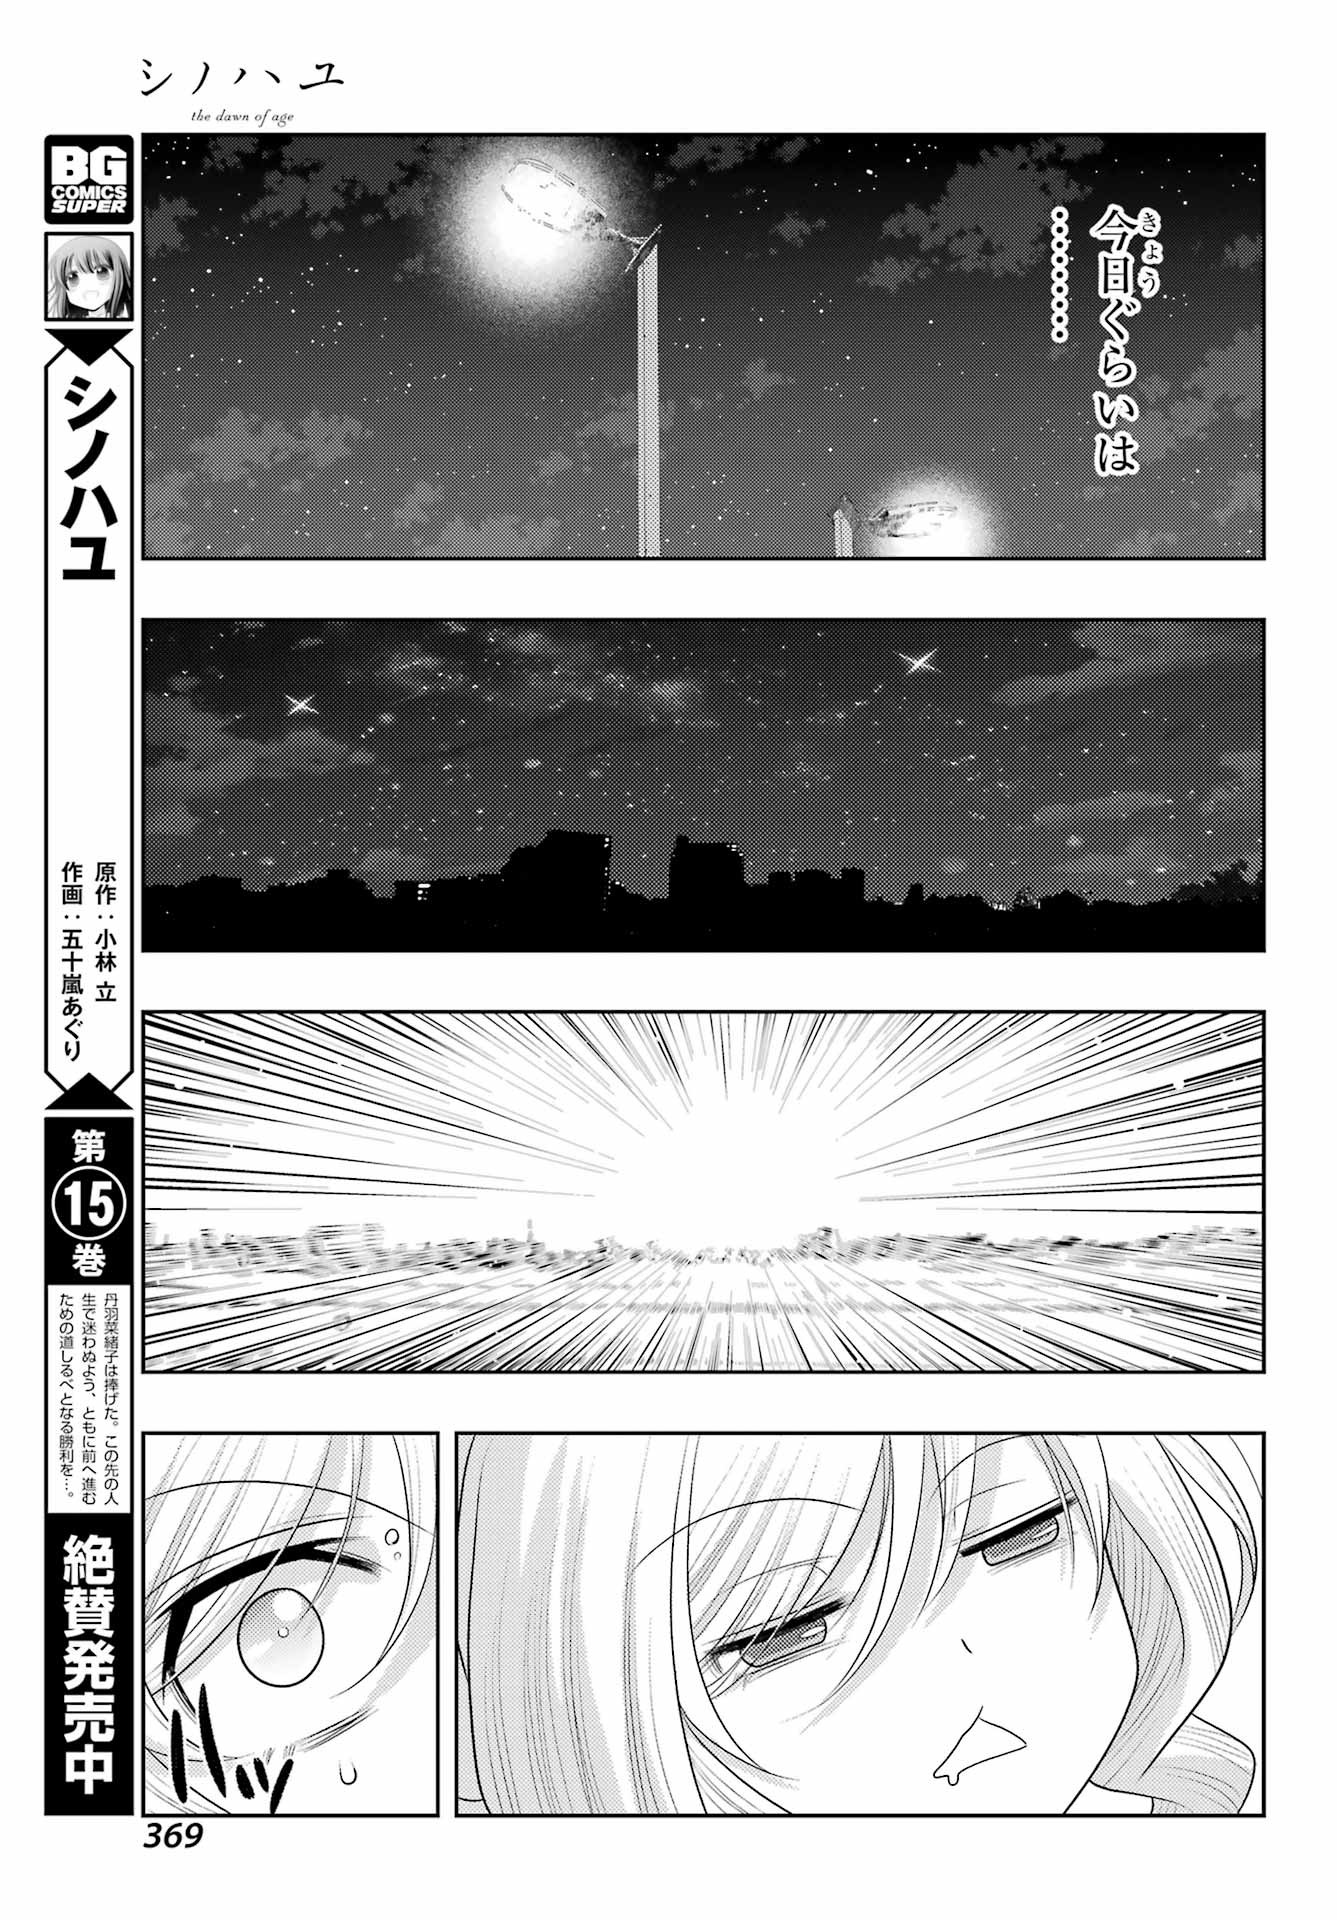 Shinohayu - The Dawn of Age Manga - Chapter 103 - Page 3